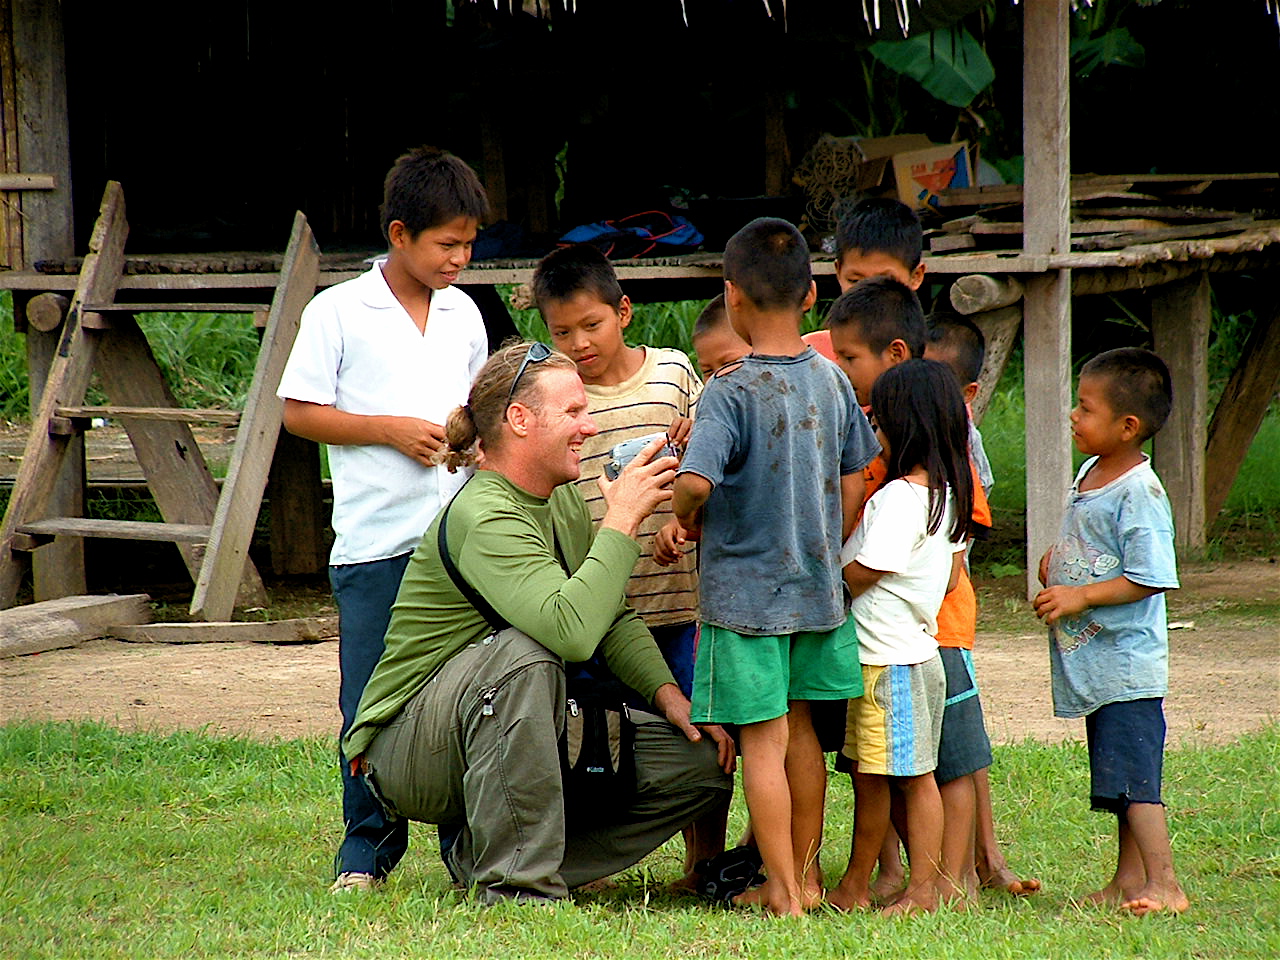 01 Robert & Shipibo Kids Peru rainforest.JPG